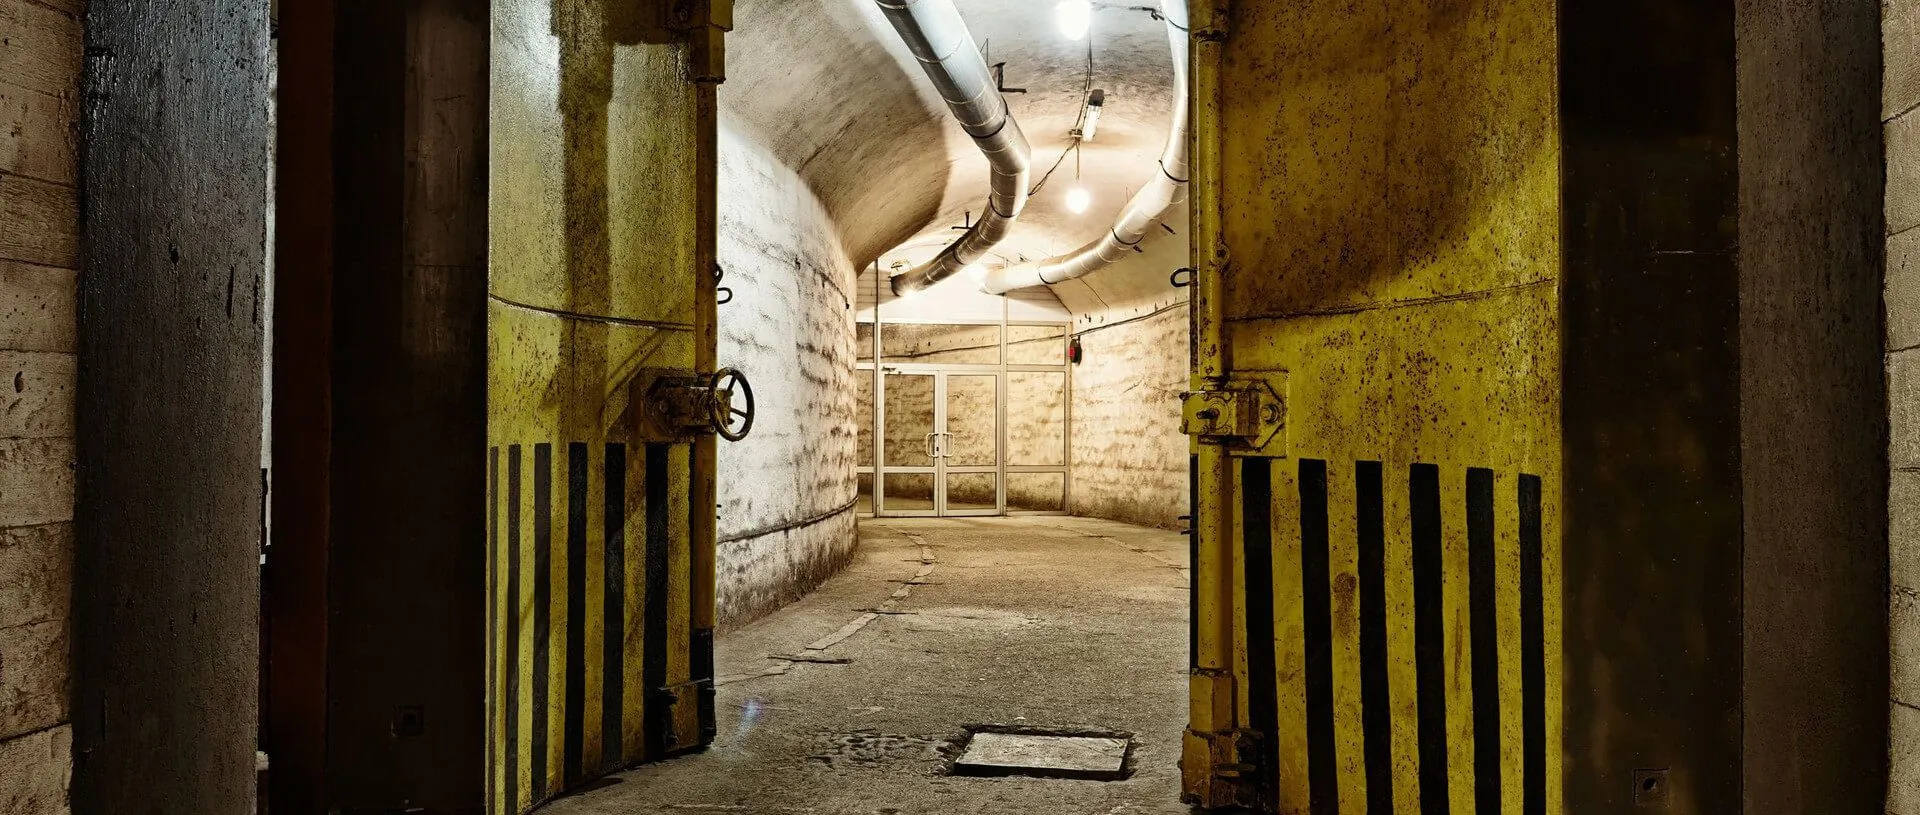 Doomsday Bunker Escape Room